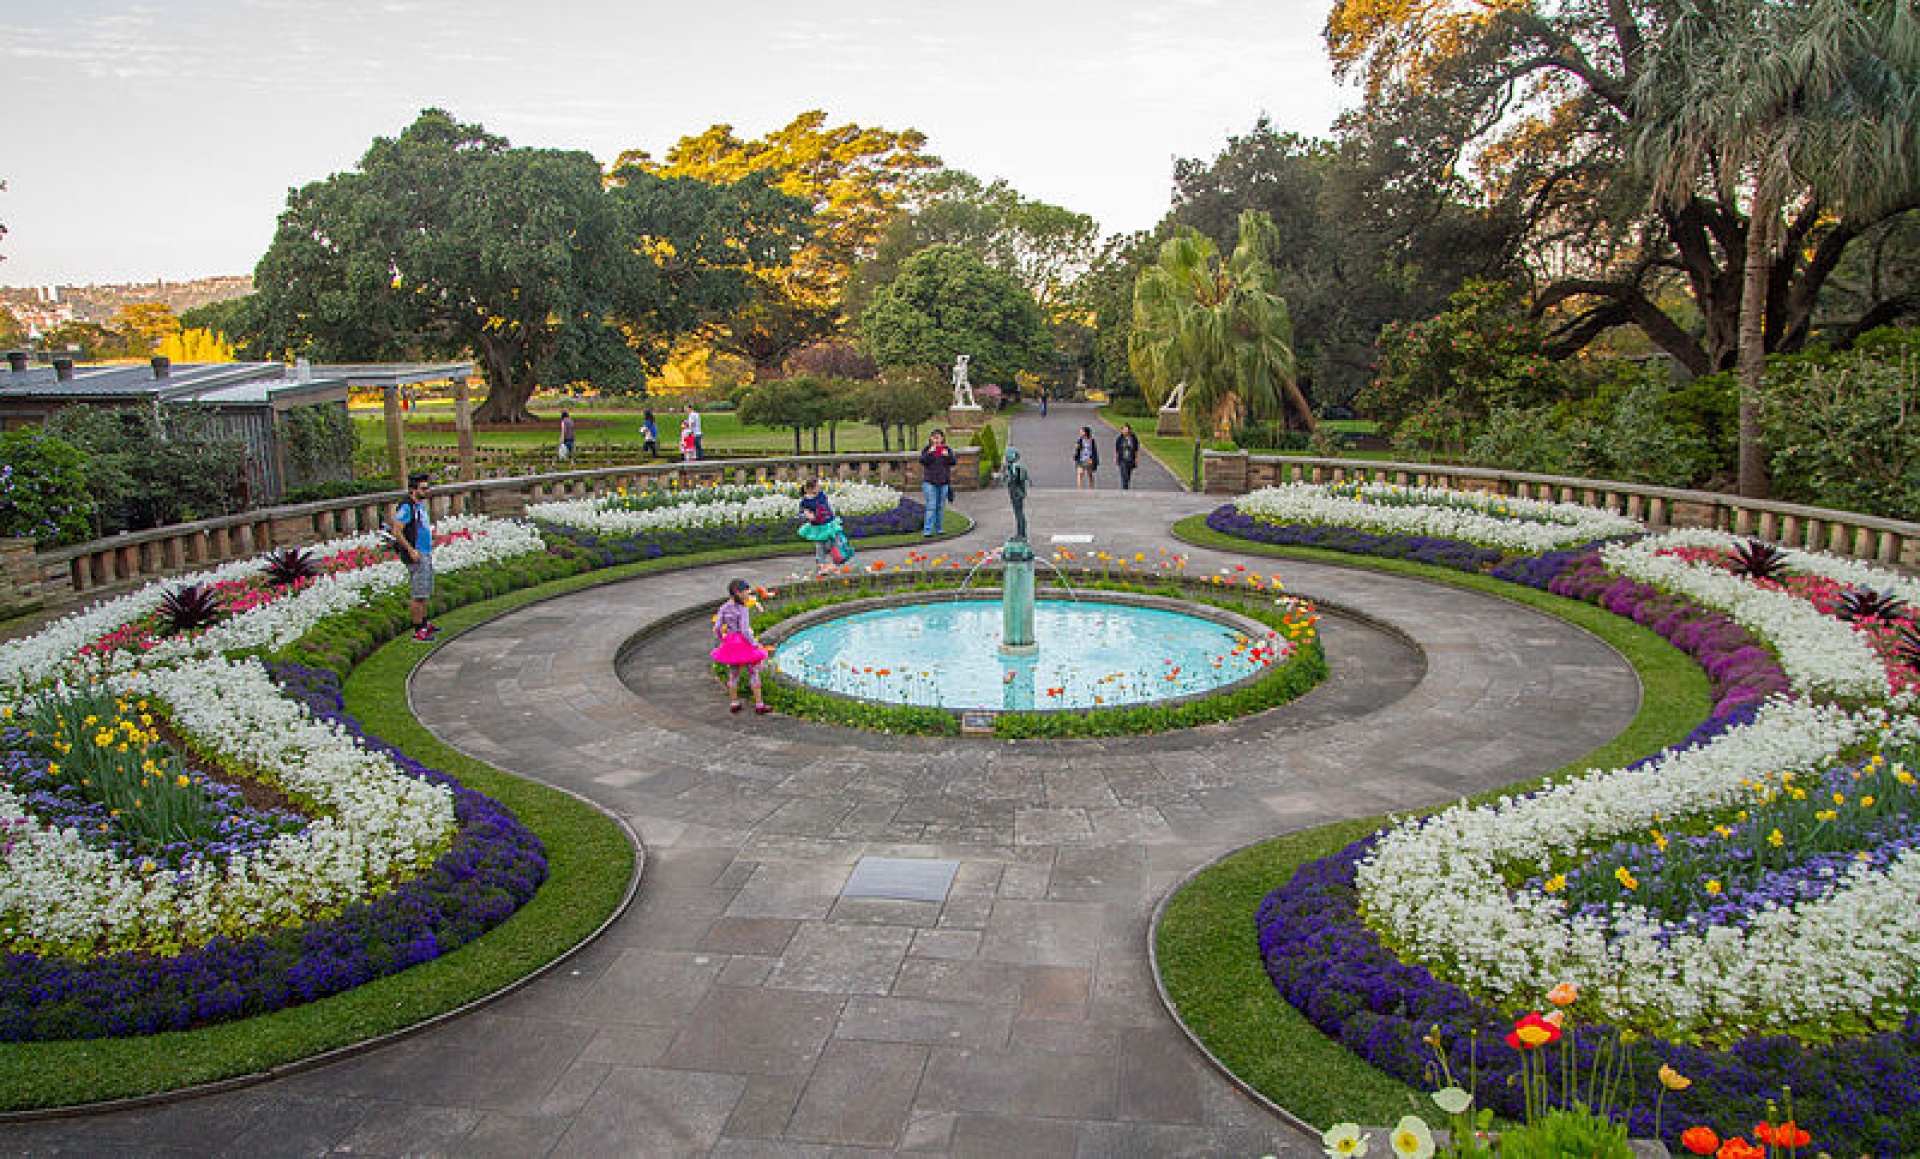 The Royal Botanic Garden Sydney - SPOTTERON Citizen Science